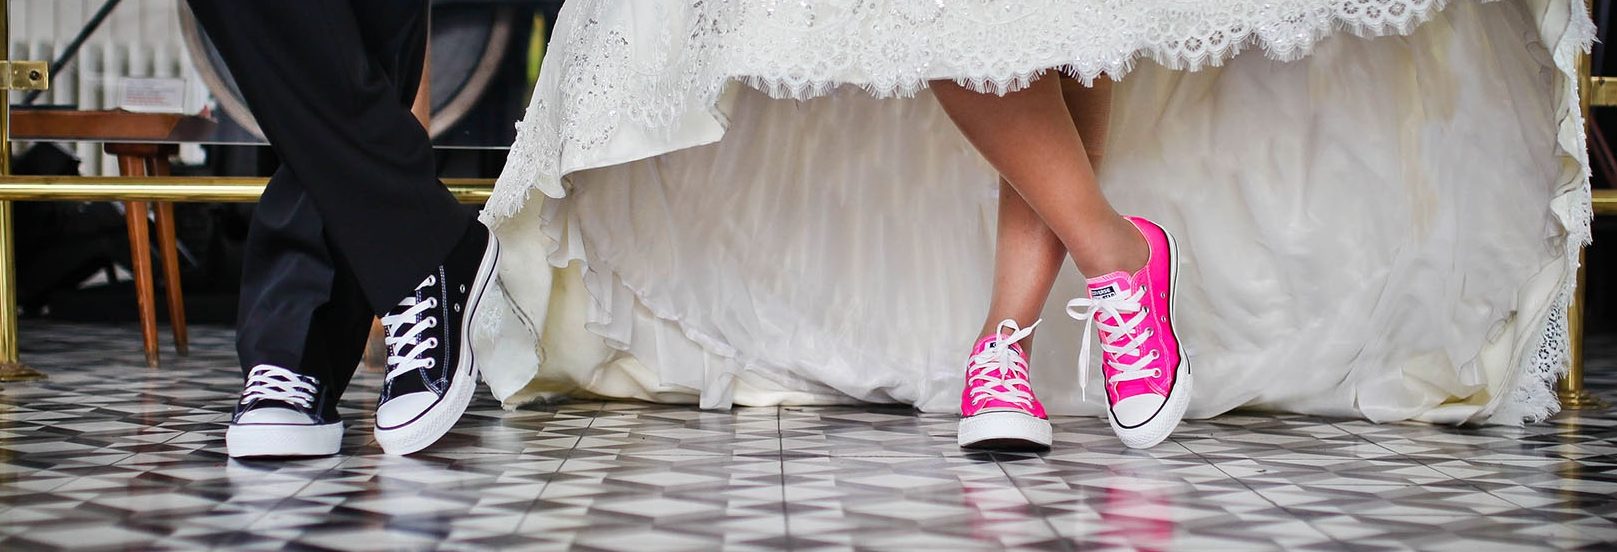 bride and groom in converse sneakers